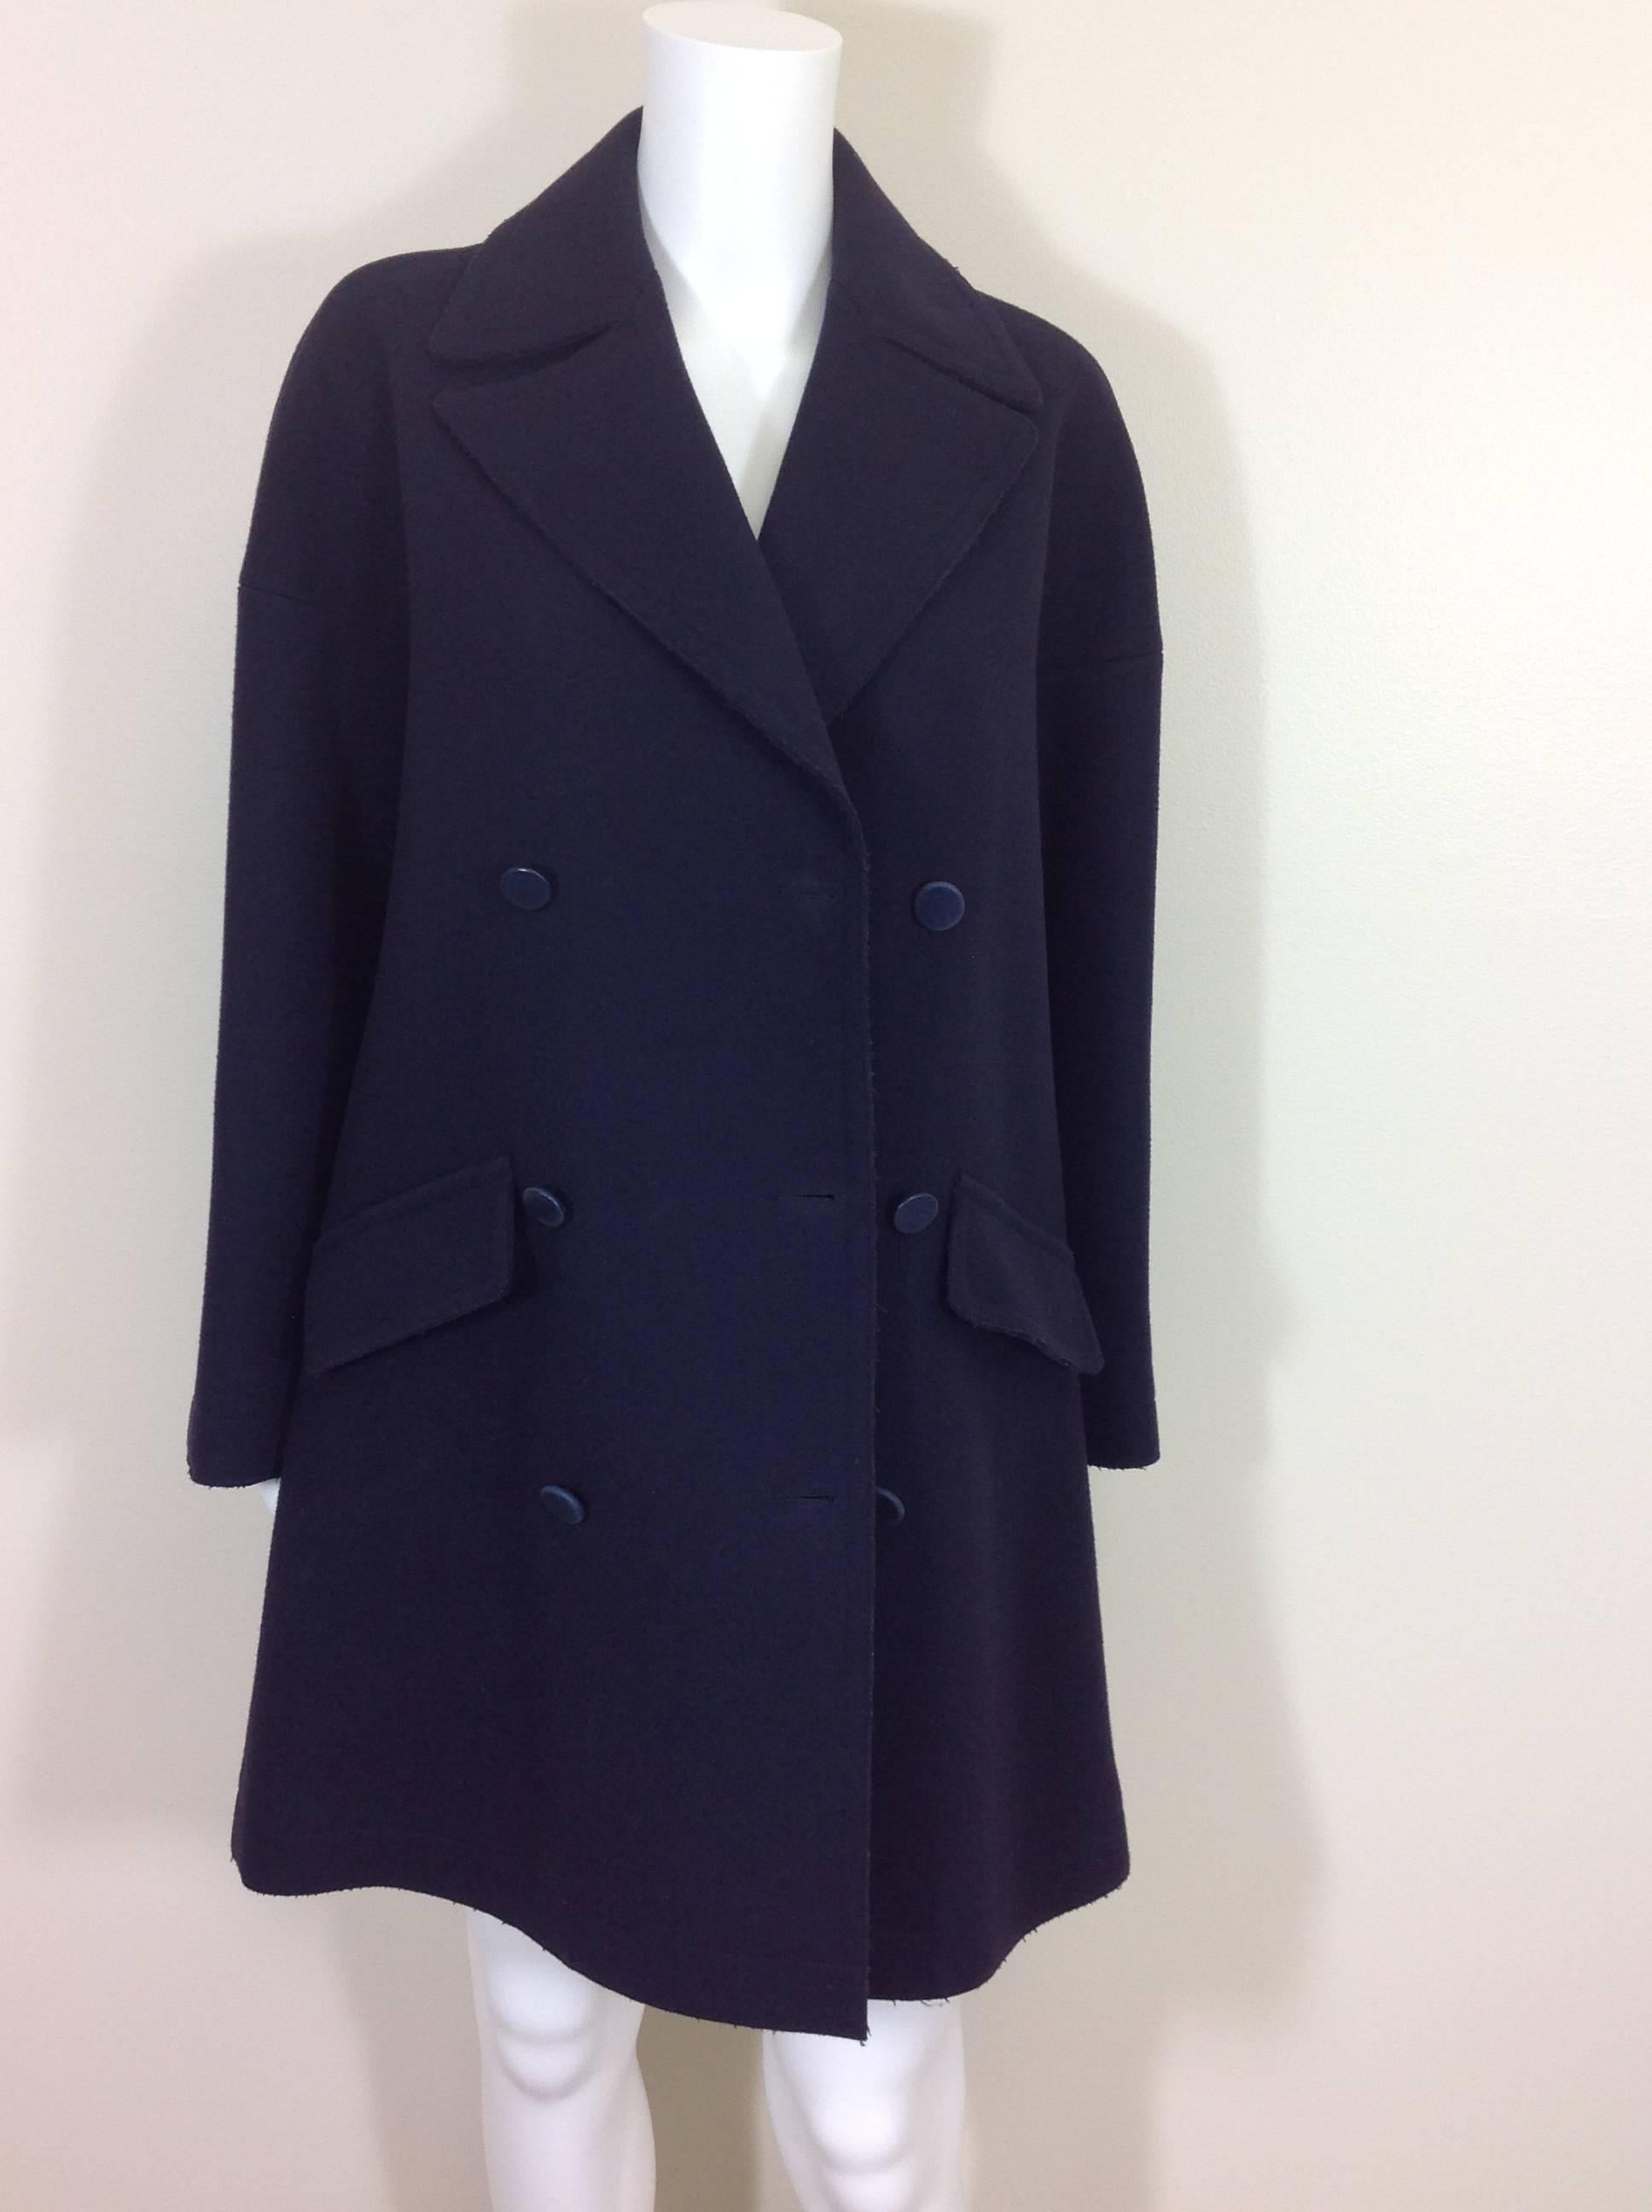 Alaia navy wool pea coat             Size 38 1